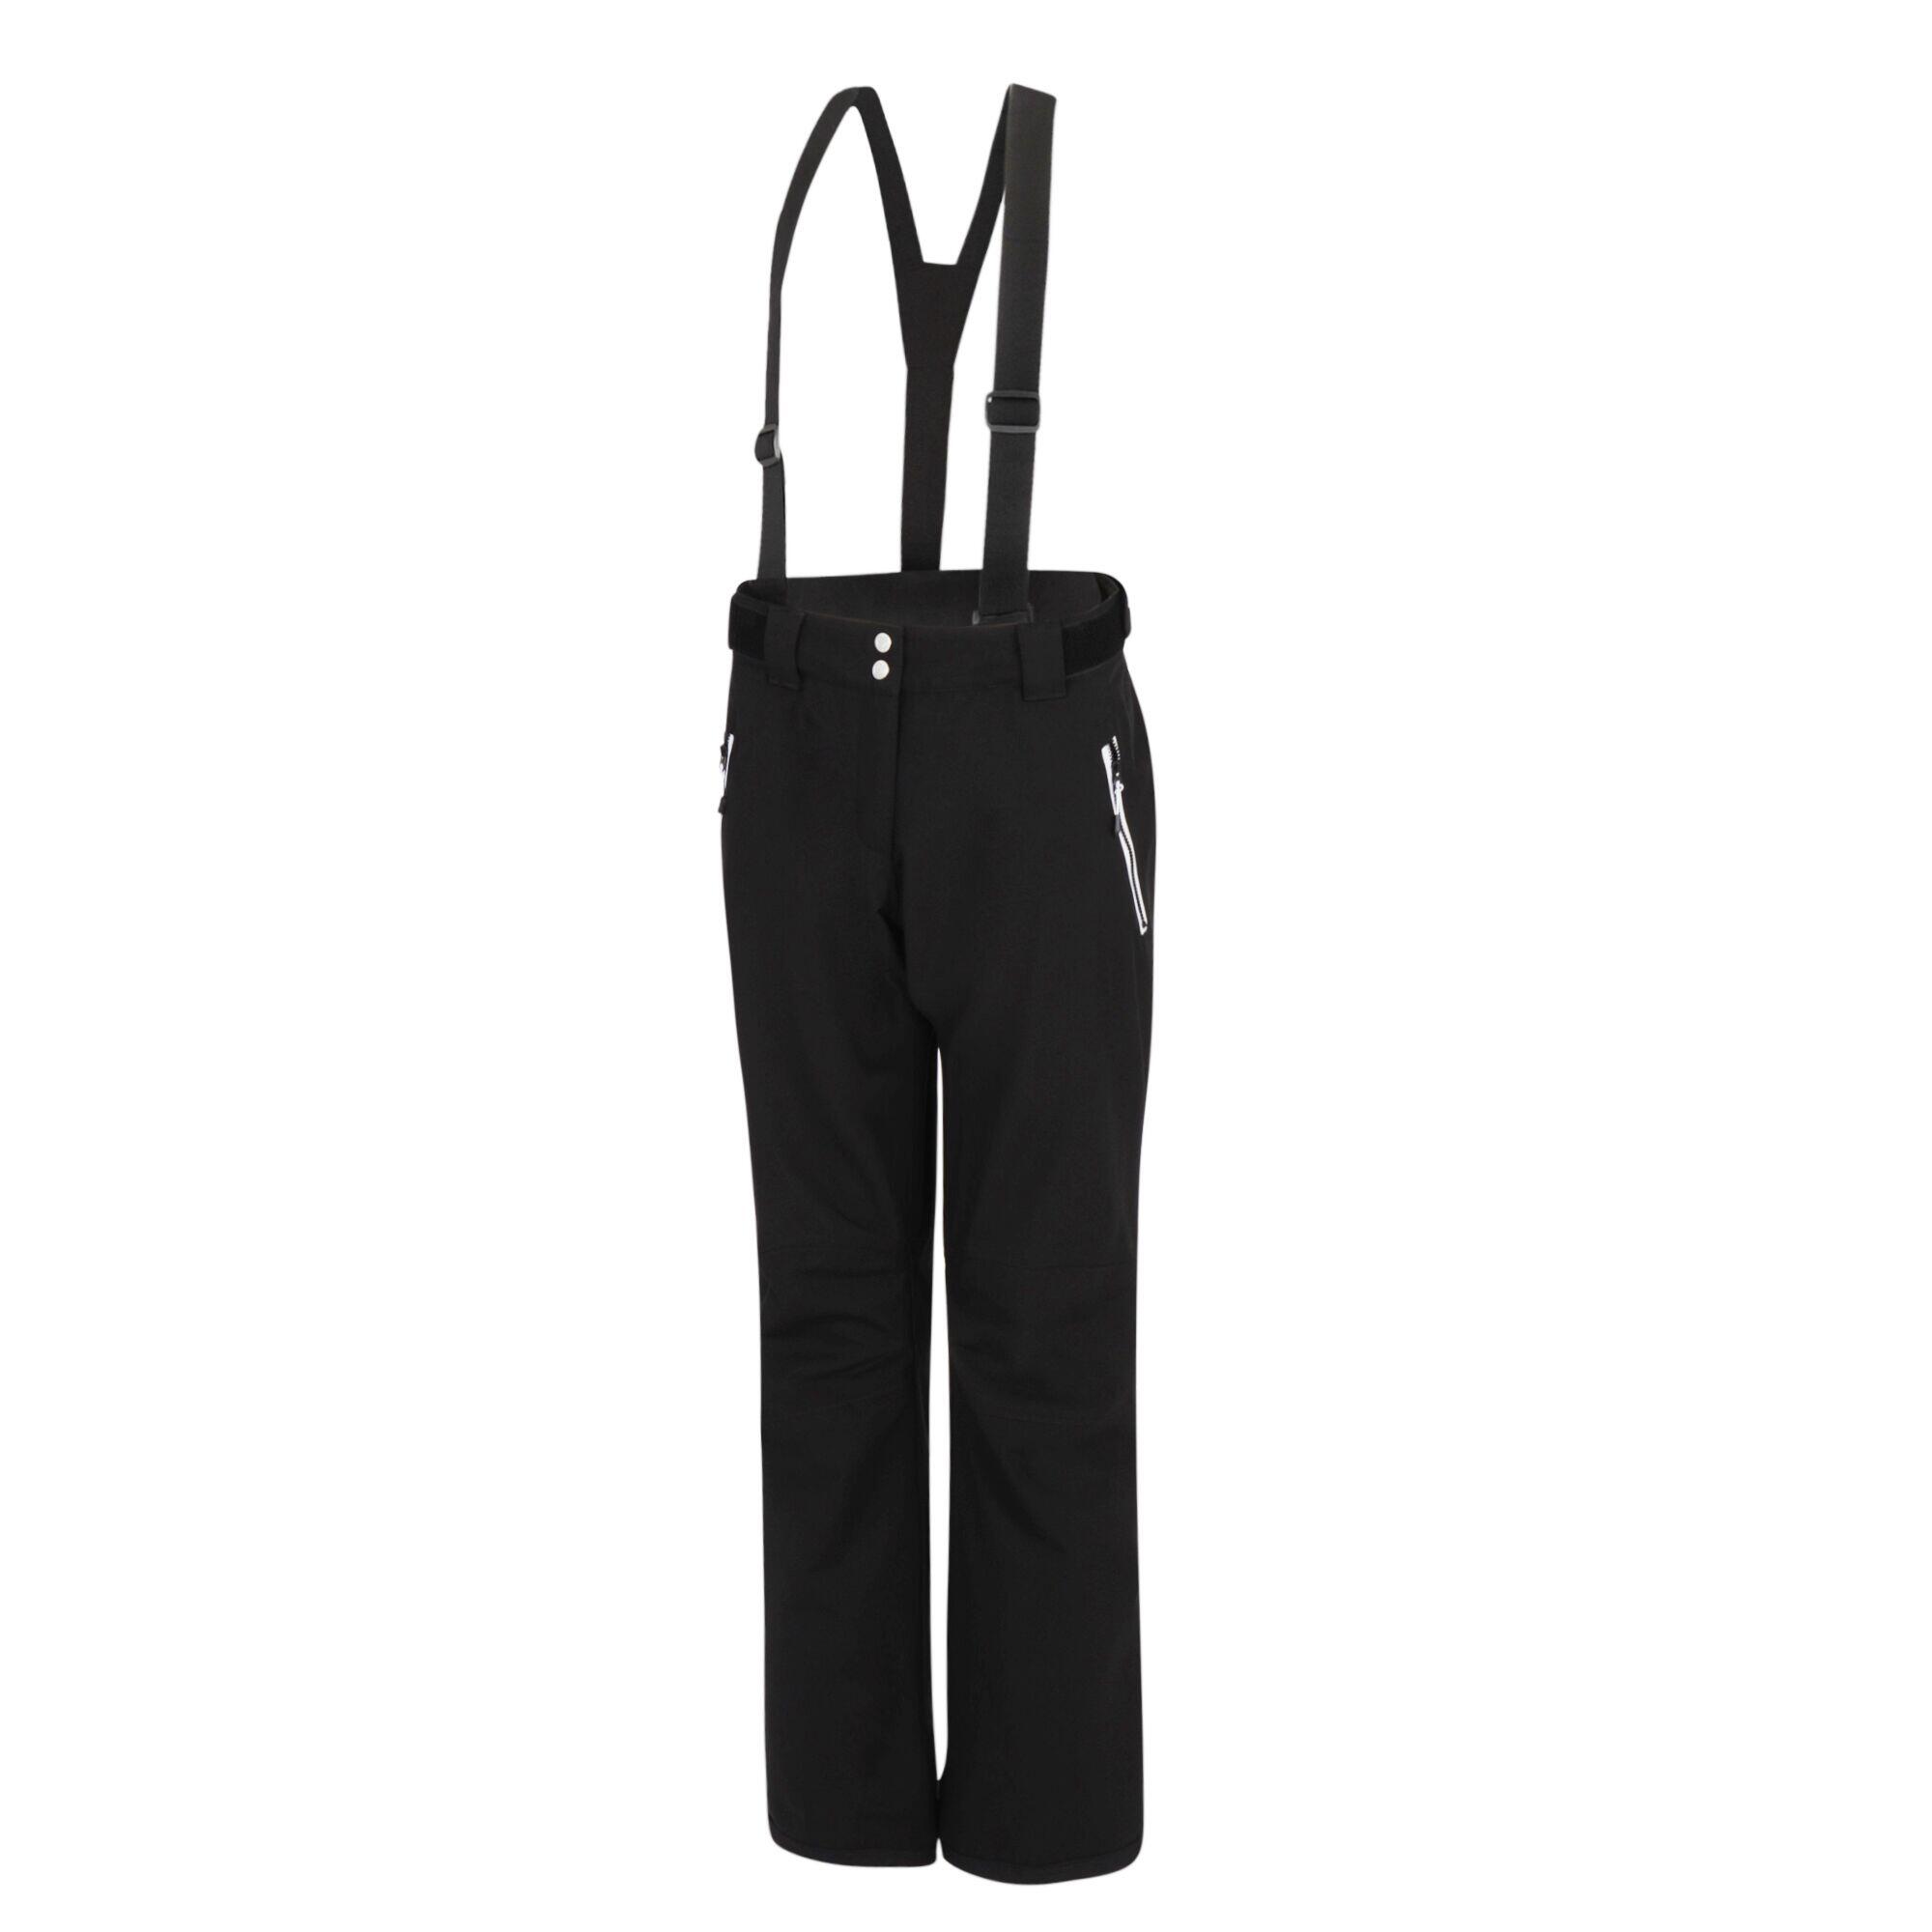 Effused Women's Ski Pants - Insulated - Black 2/5